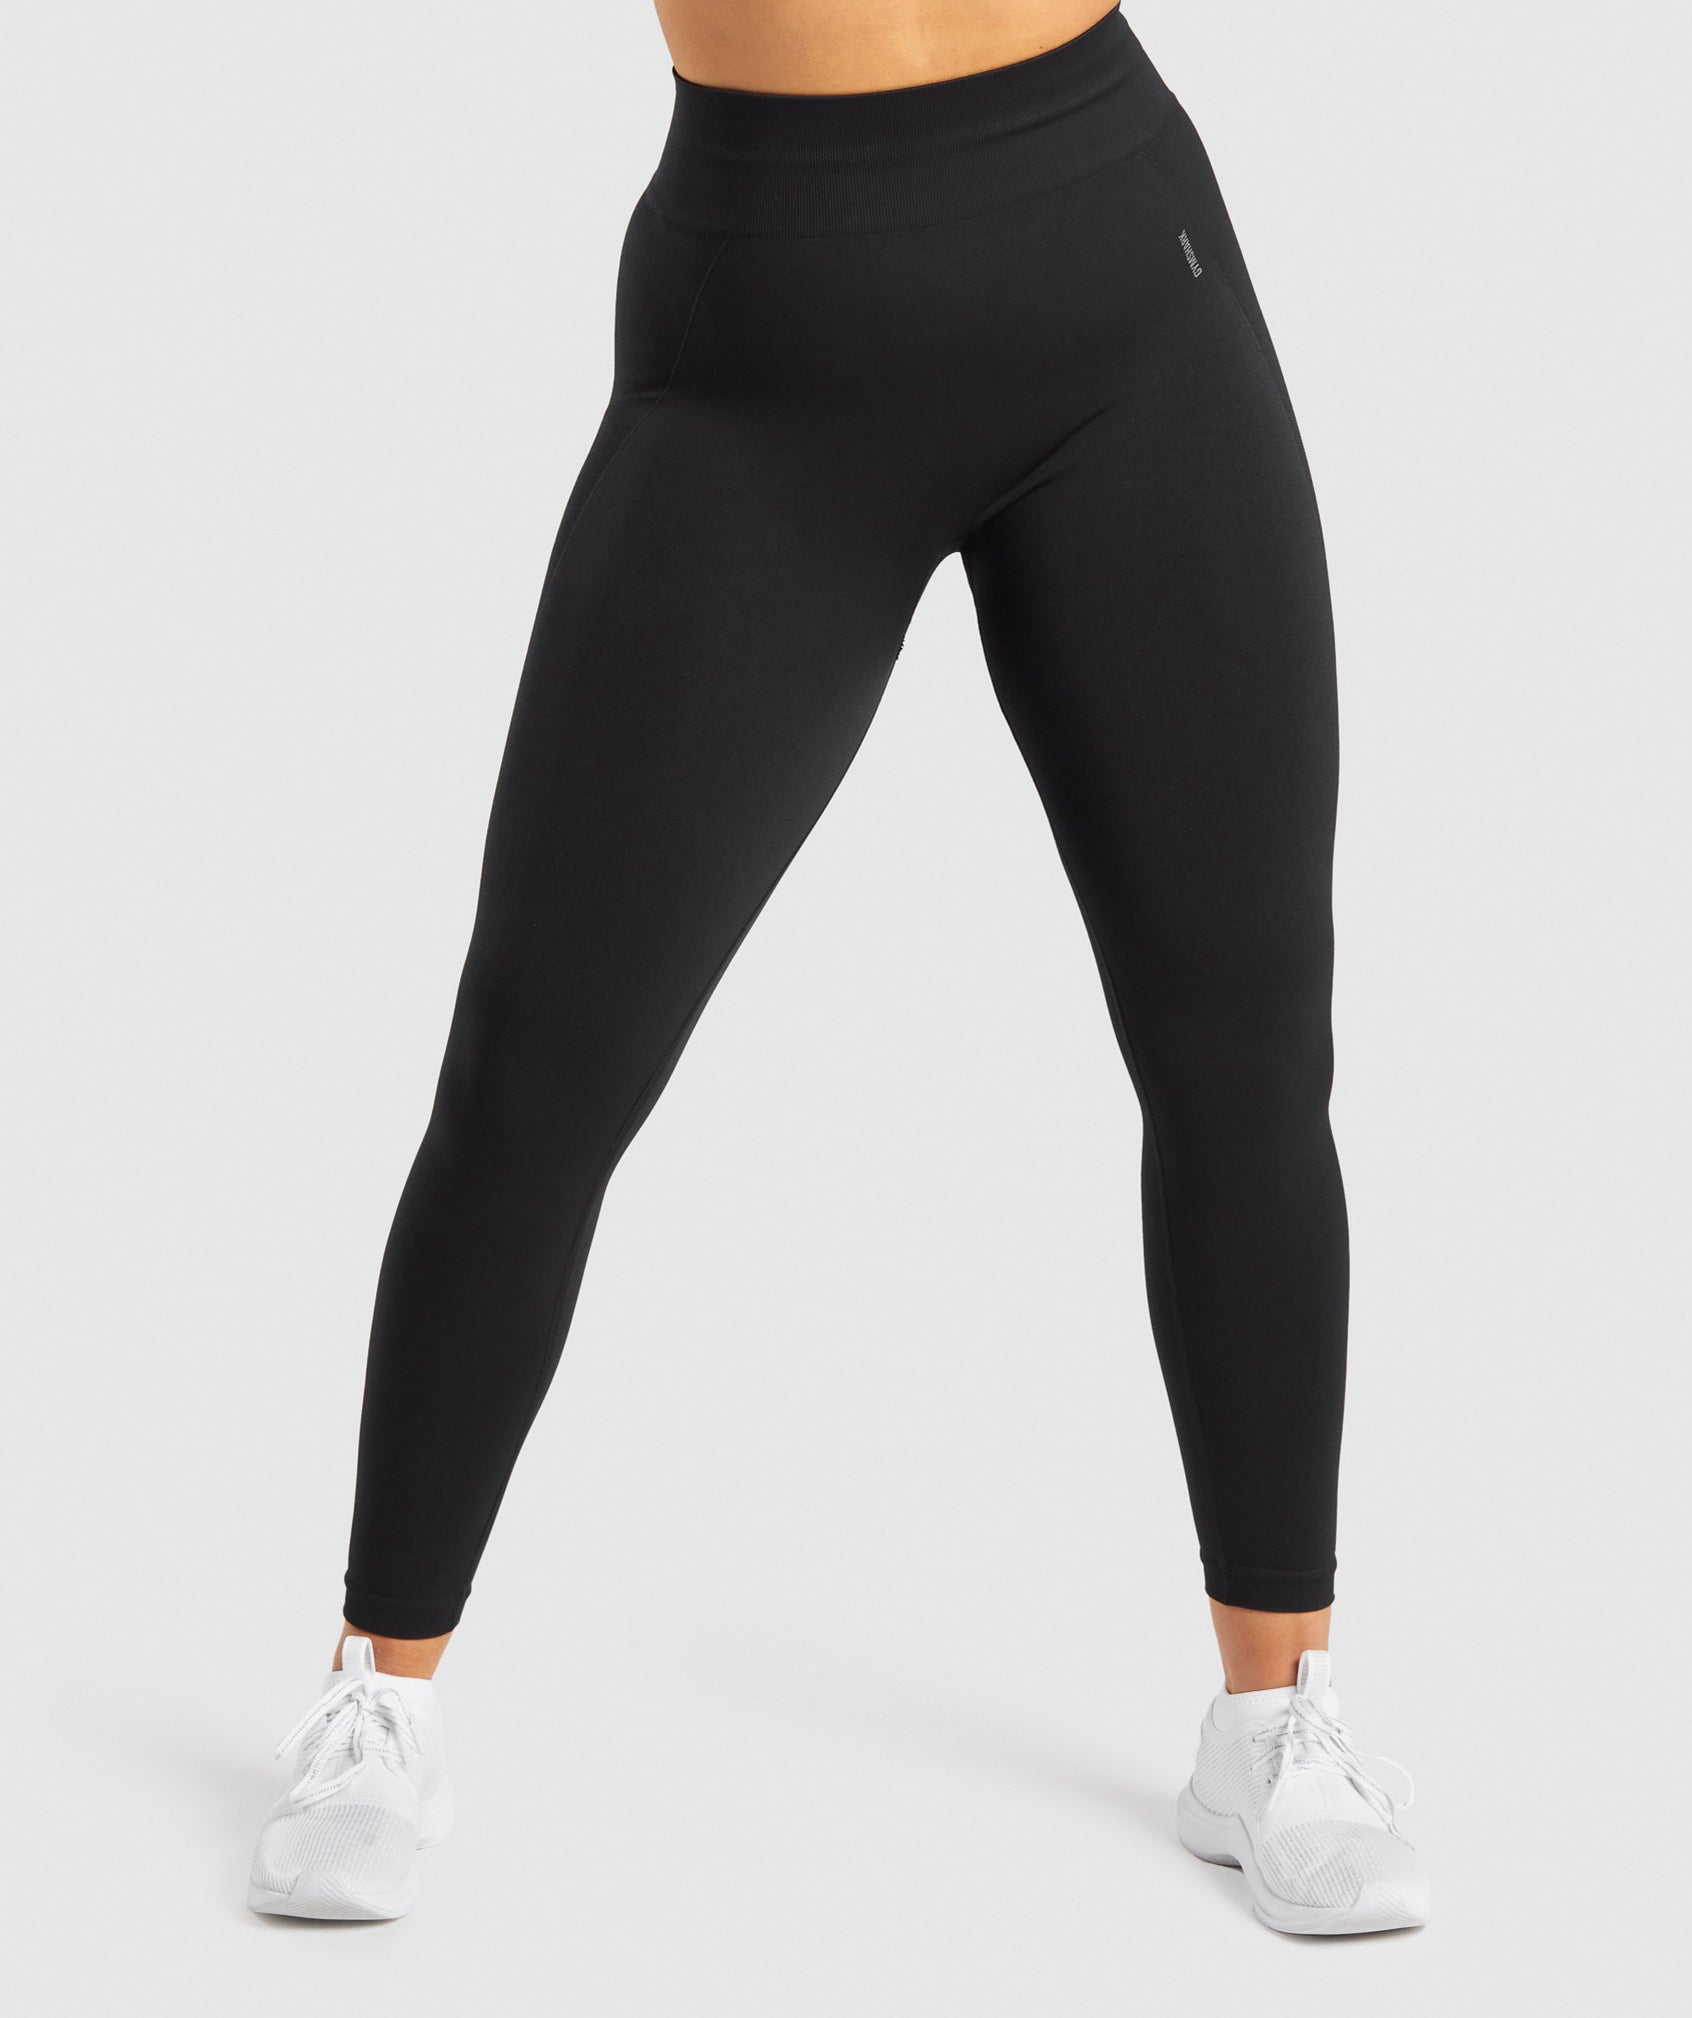 Gymshark High Waisted Flex Leggings Gray Size XS - $42 - From Karlee